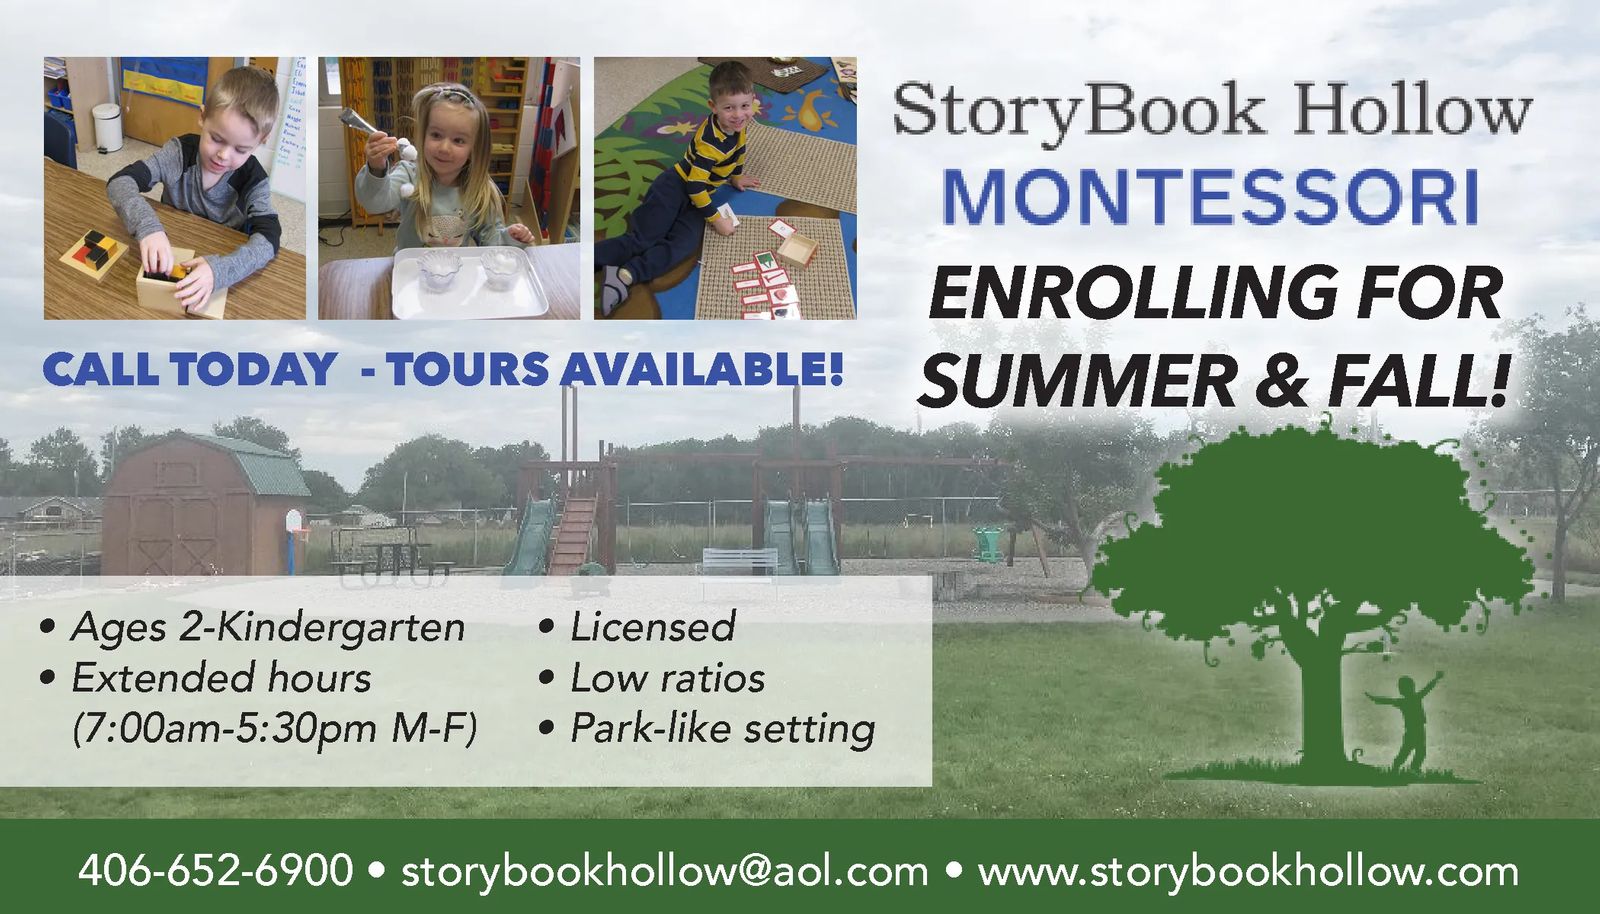 StoryBook Hollow Montessori